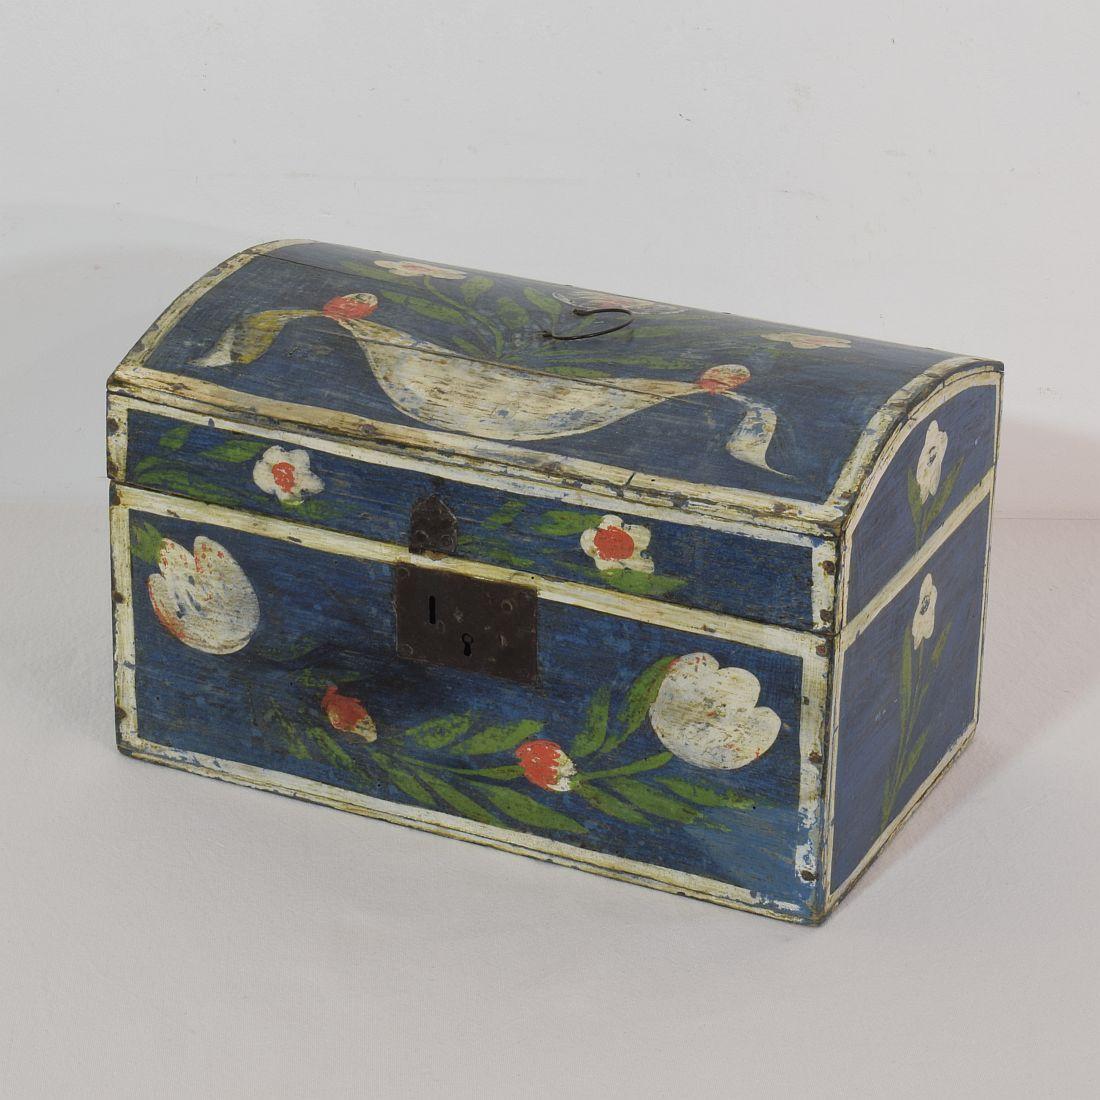 Beautiful Folk Art wedding box.
Normandie, France, circa 1800-1850. Weathered. Lock missing.
 
 
 
  